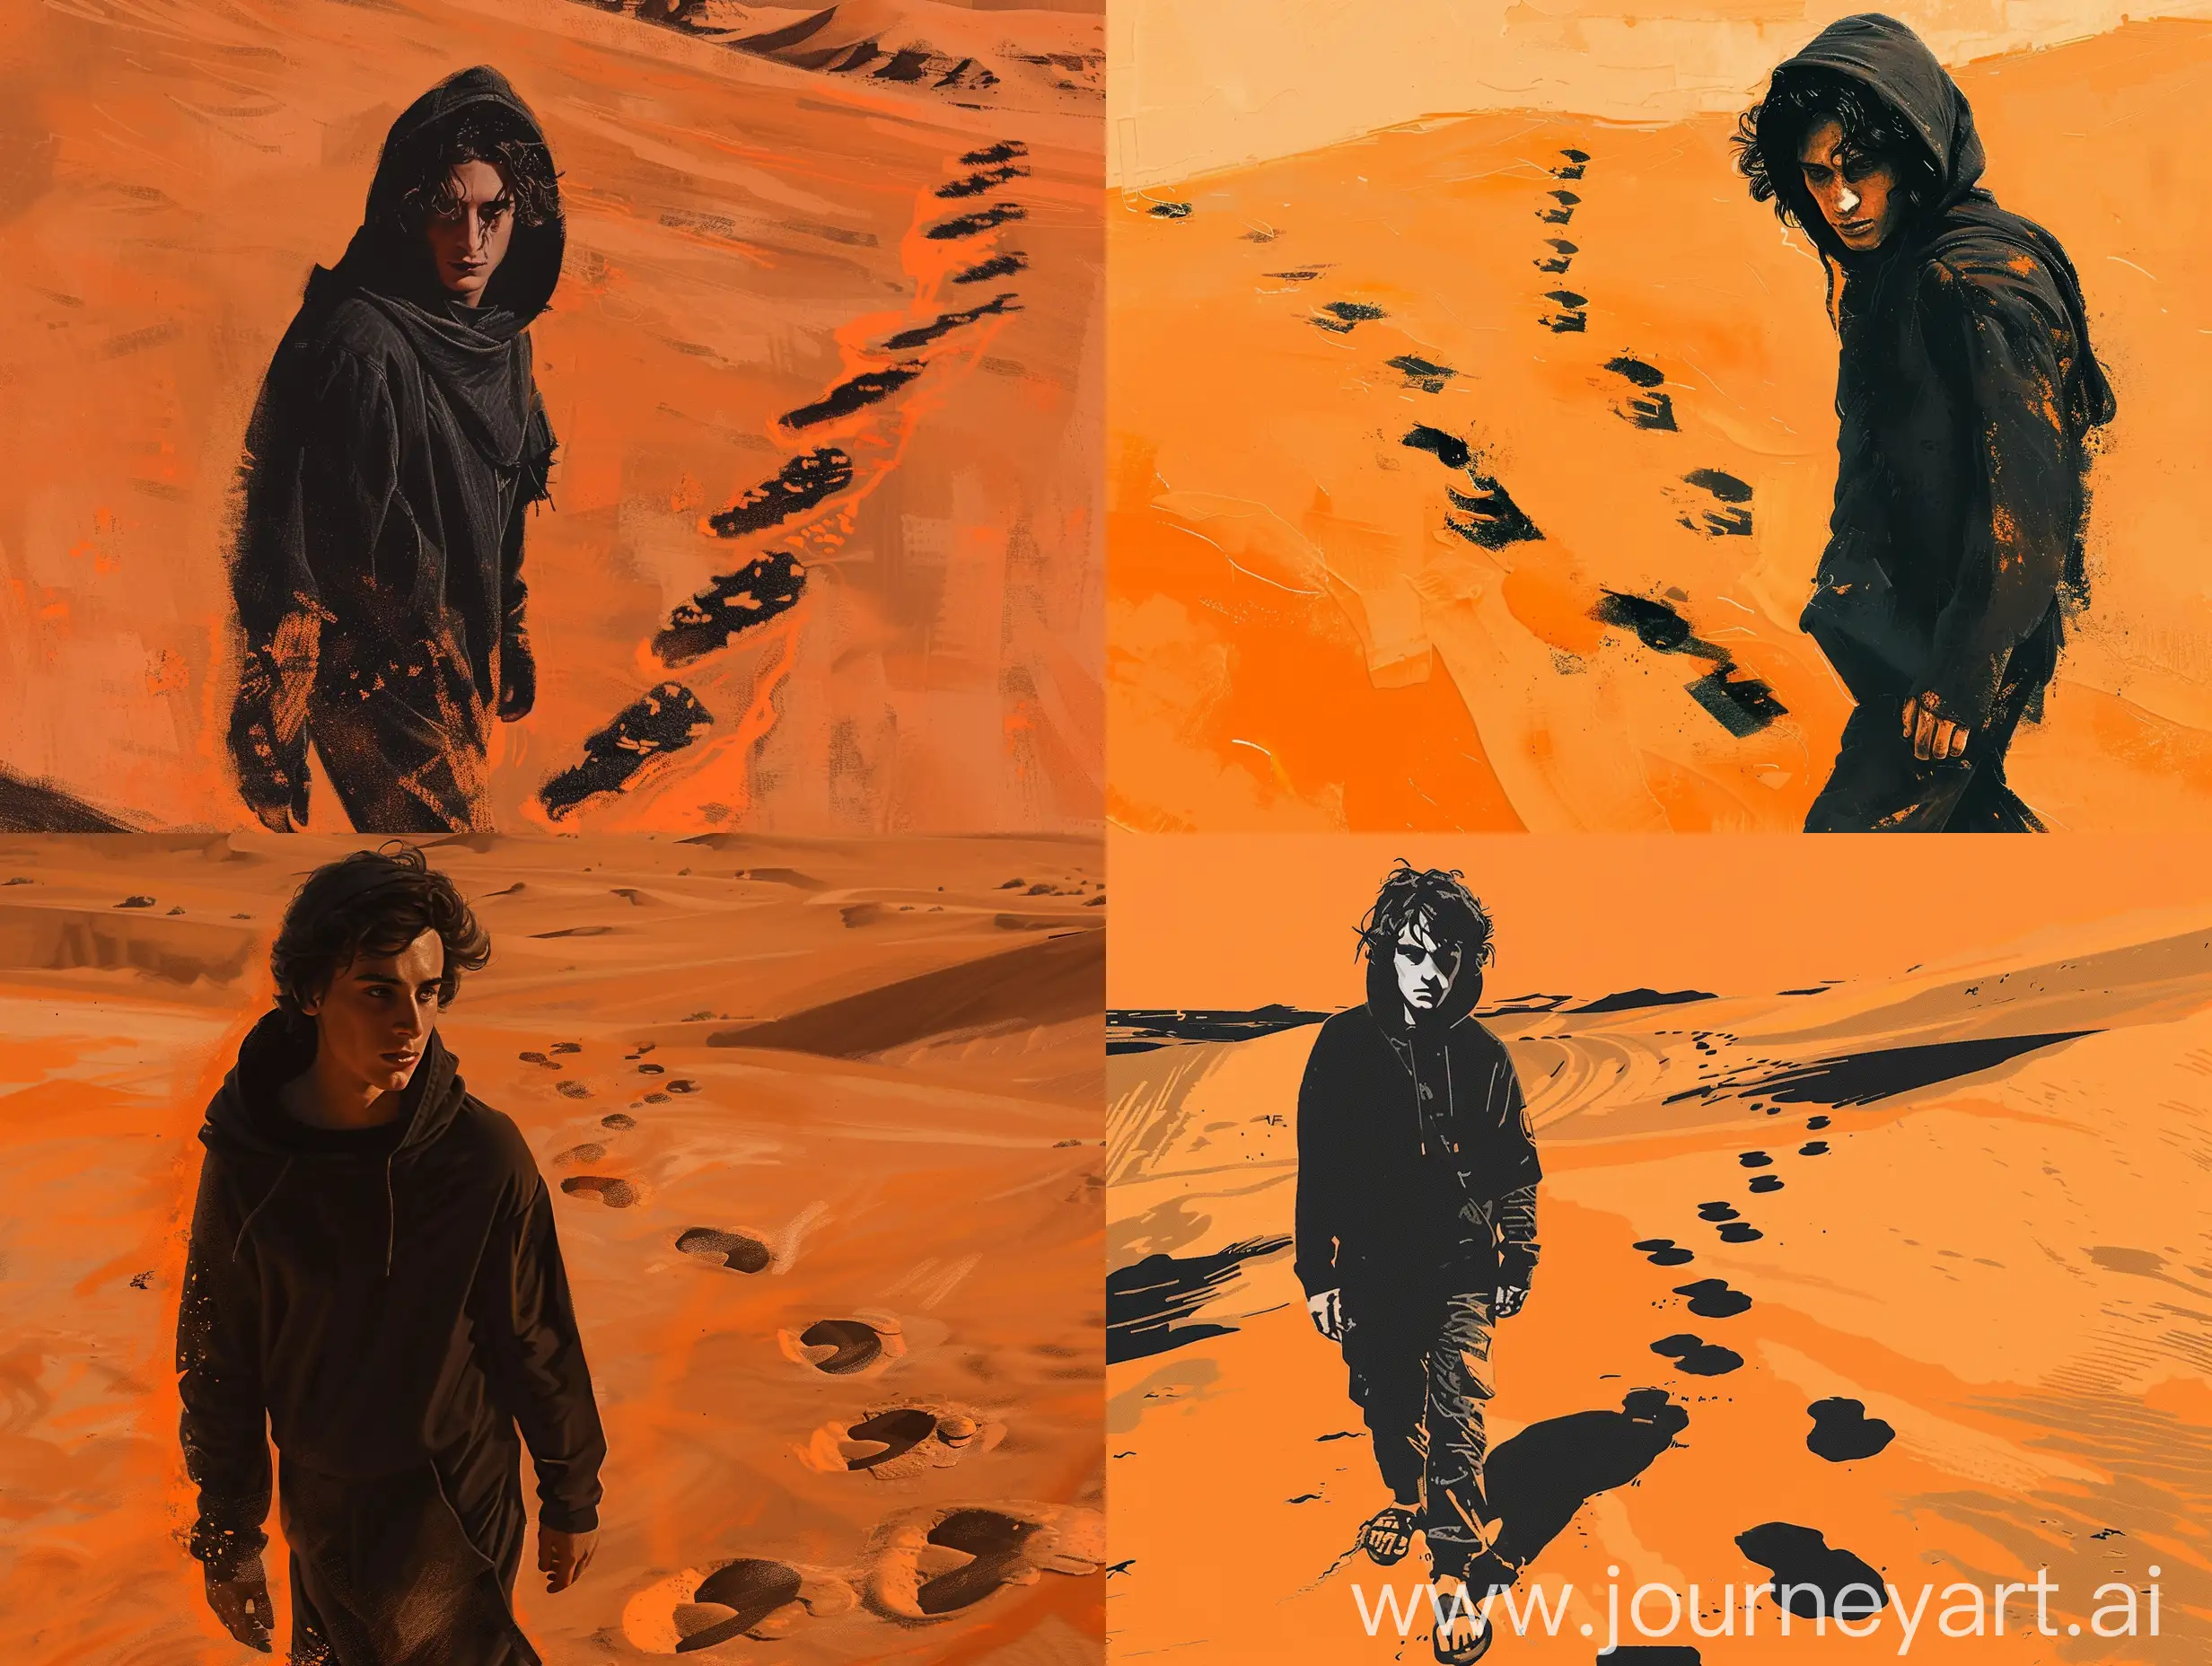 Paul-Atreides-Walking-in-the-Orange-and-Black-Themed-Desert